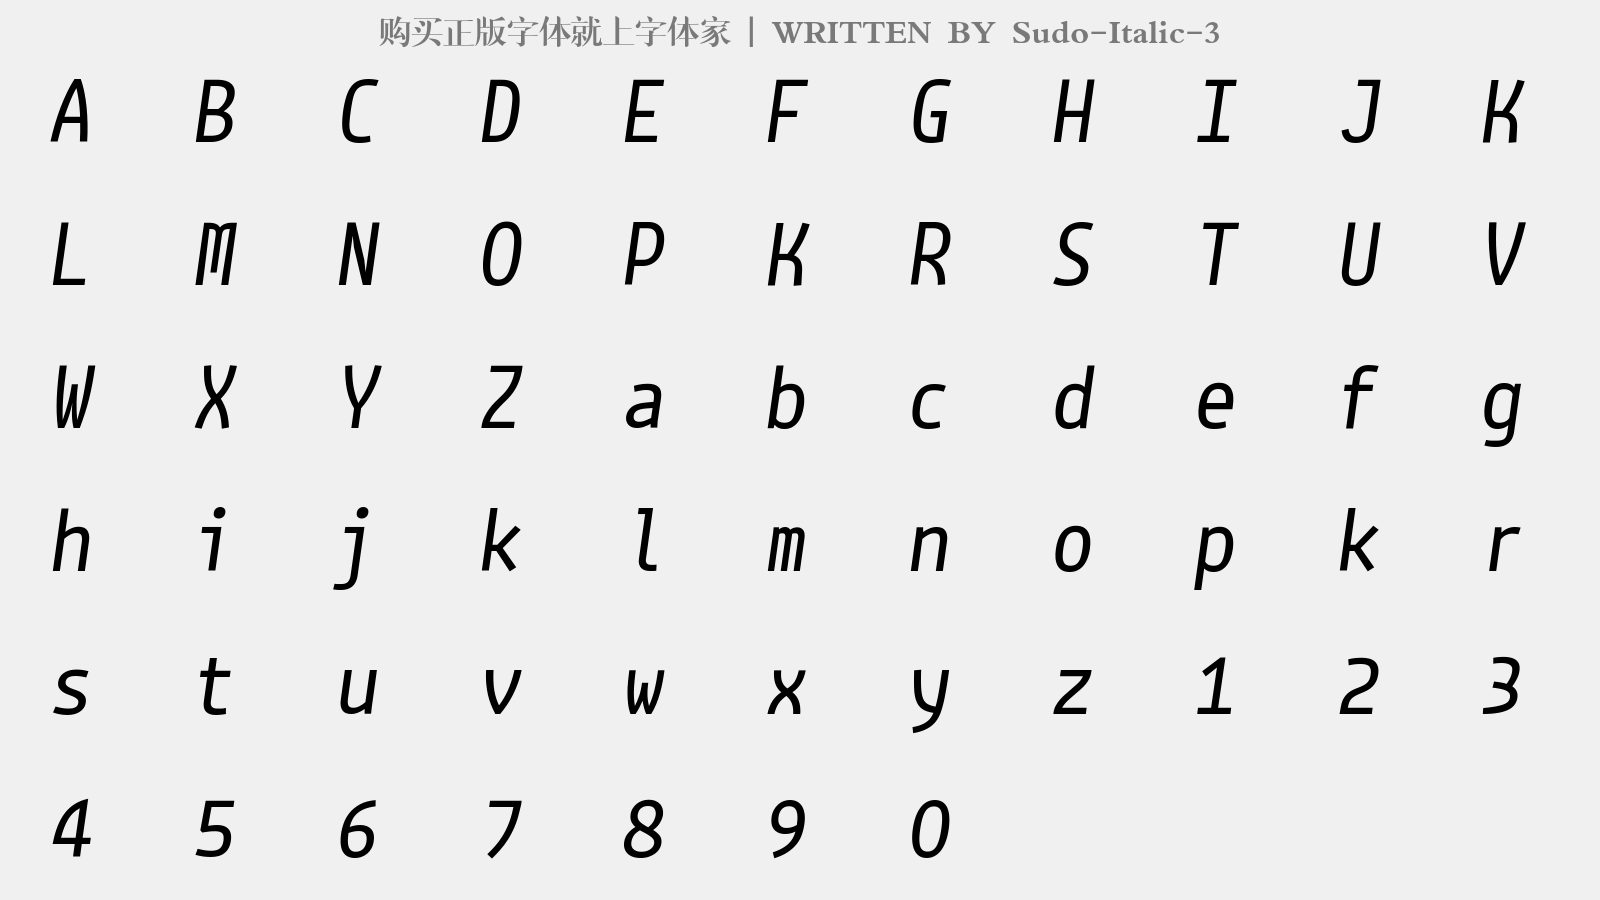 Sudo-Italic-3 - 大写字母/小写字母/数字